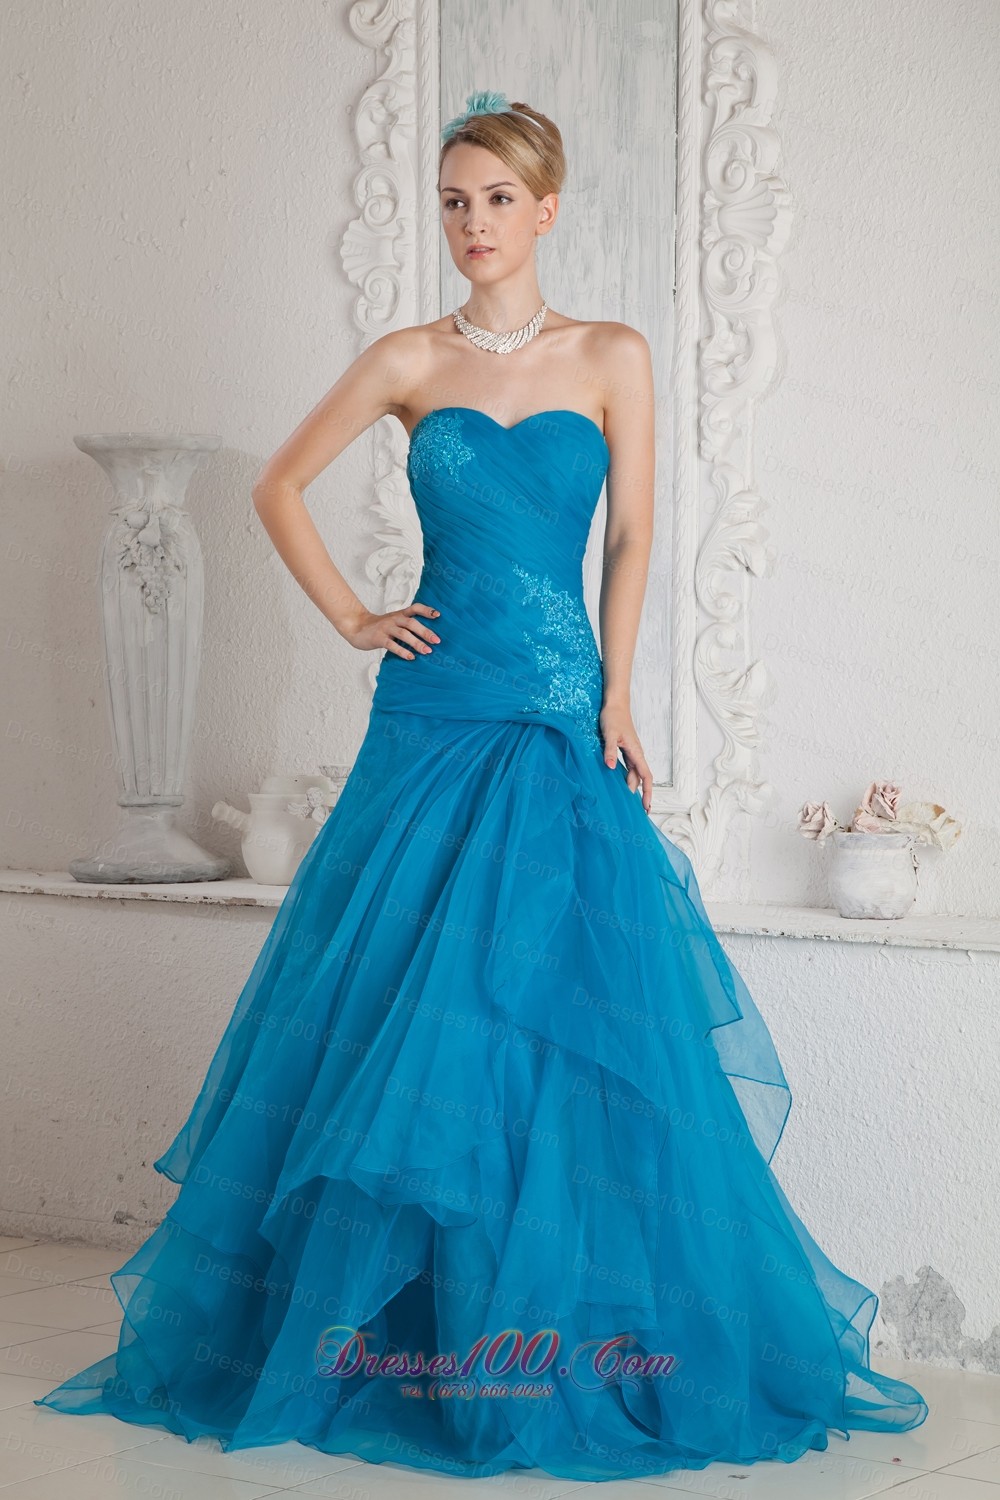 Prom Dresses Teal Color - Make You Look Like A Princess